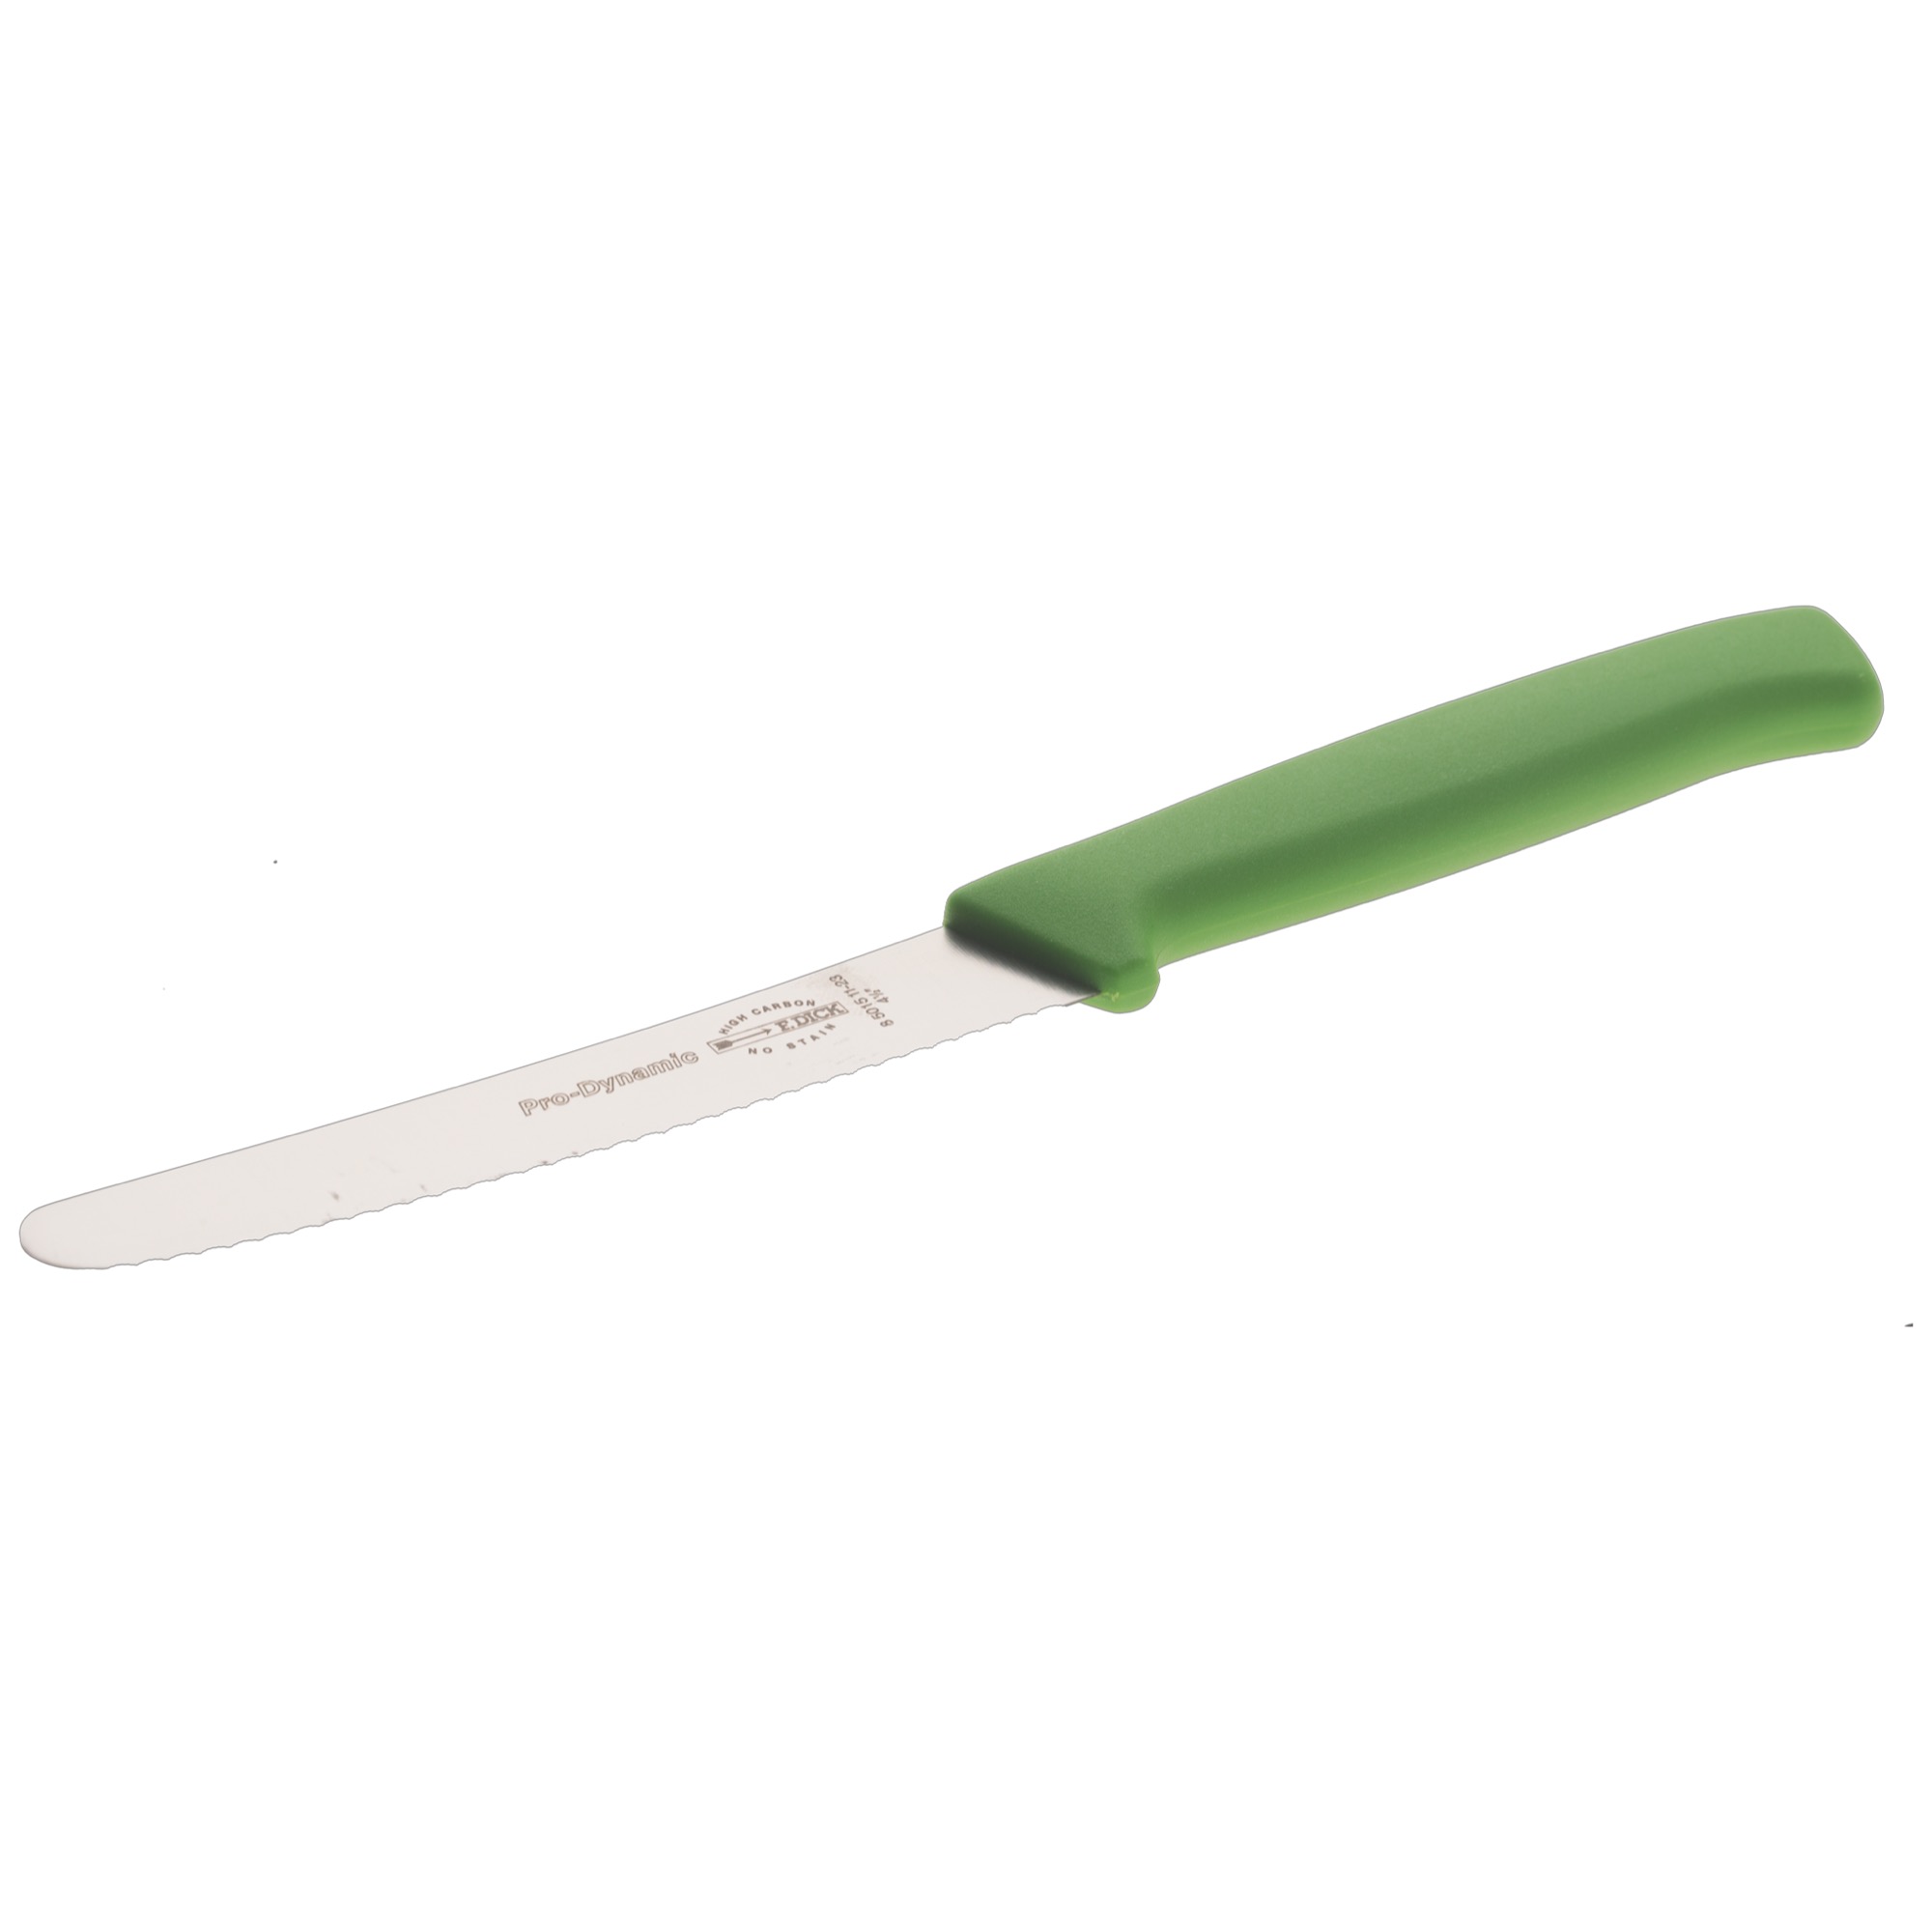 Dick nôž univerzálny zelený 10cm